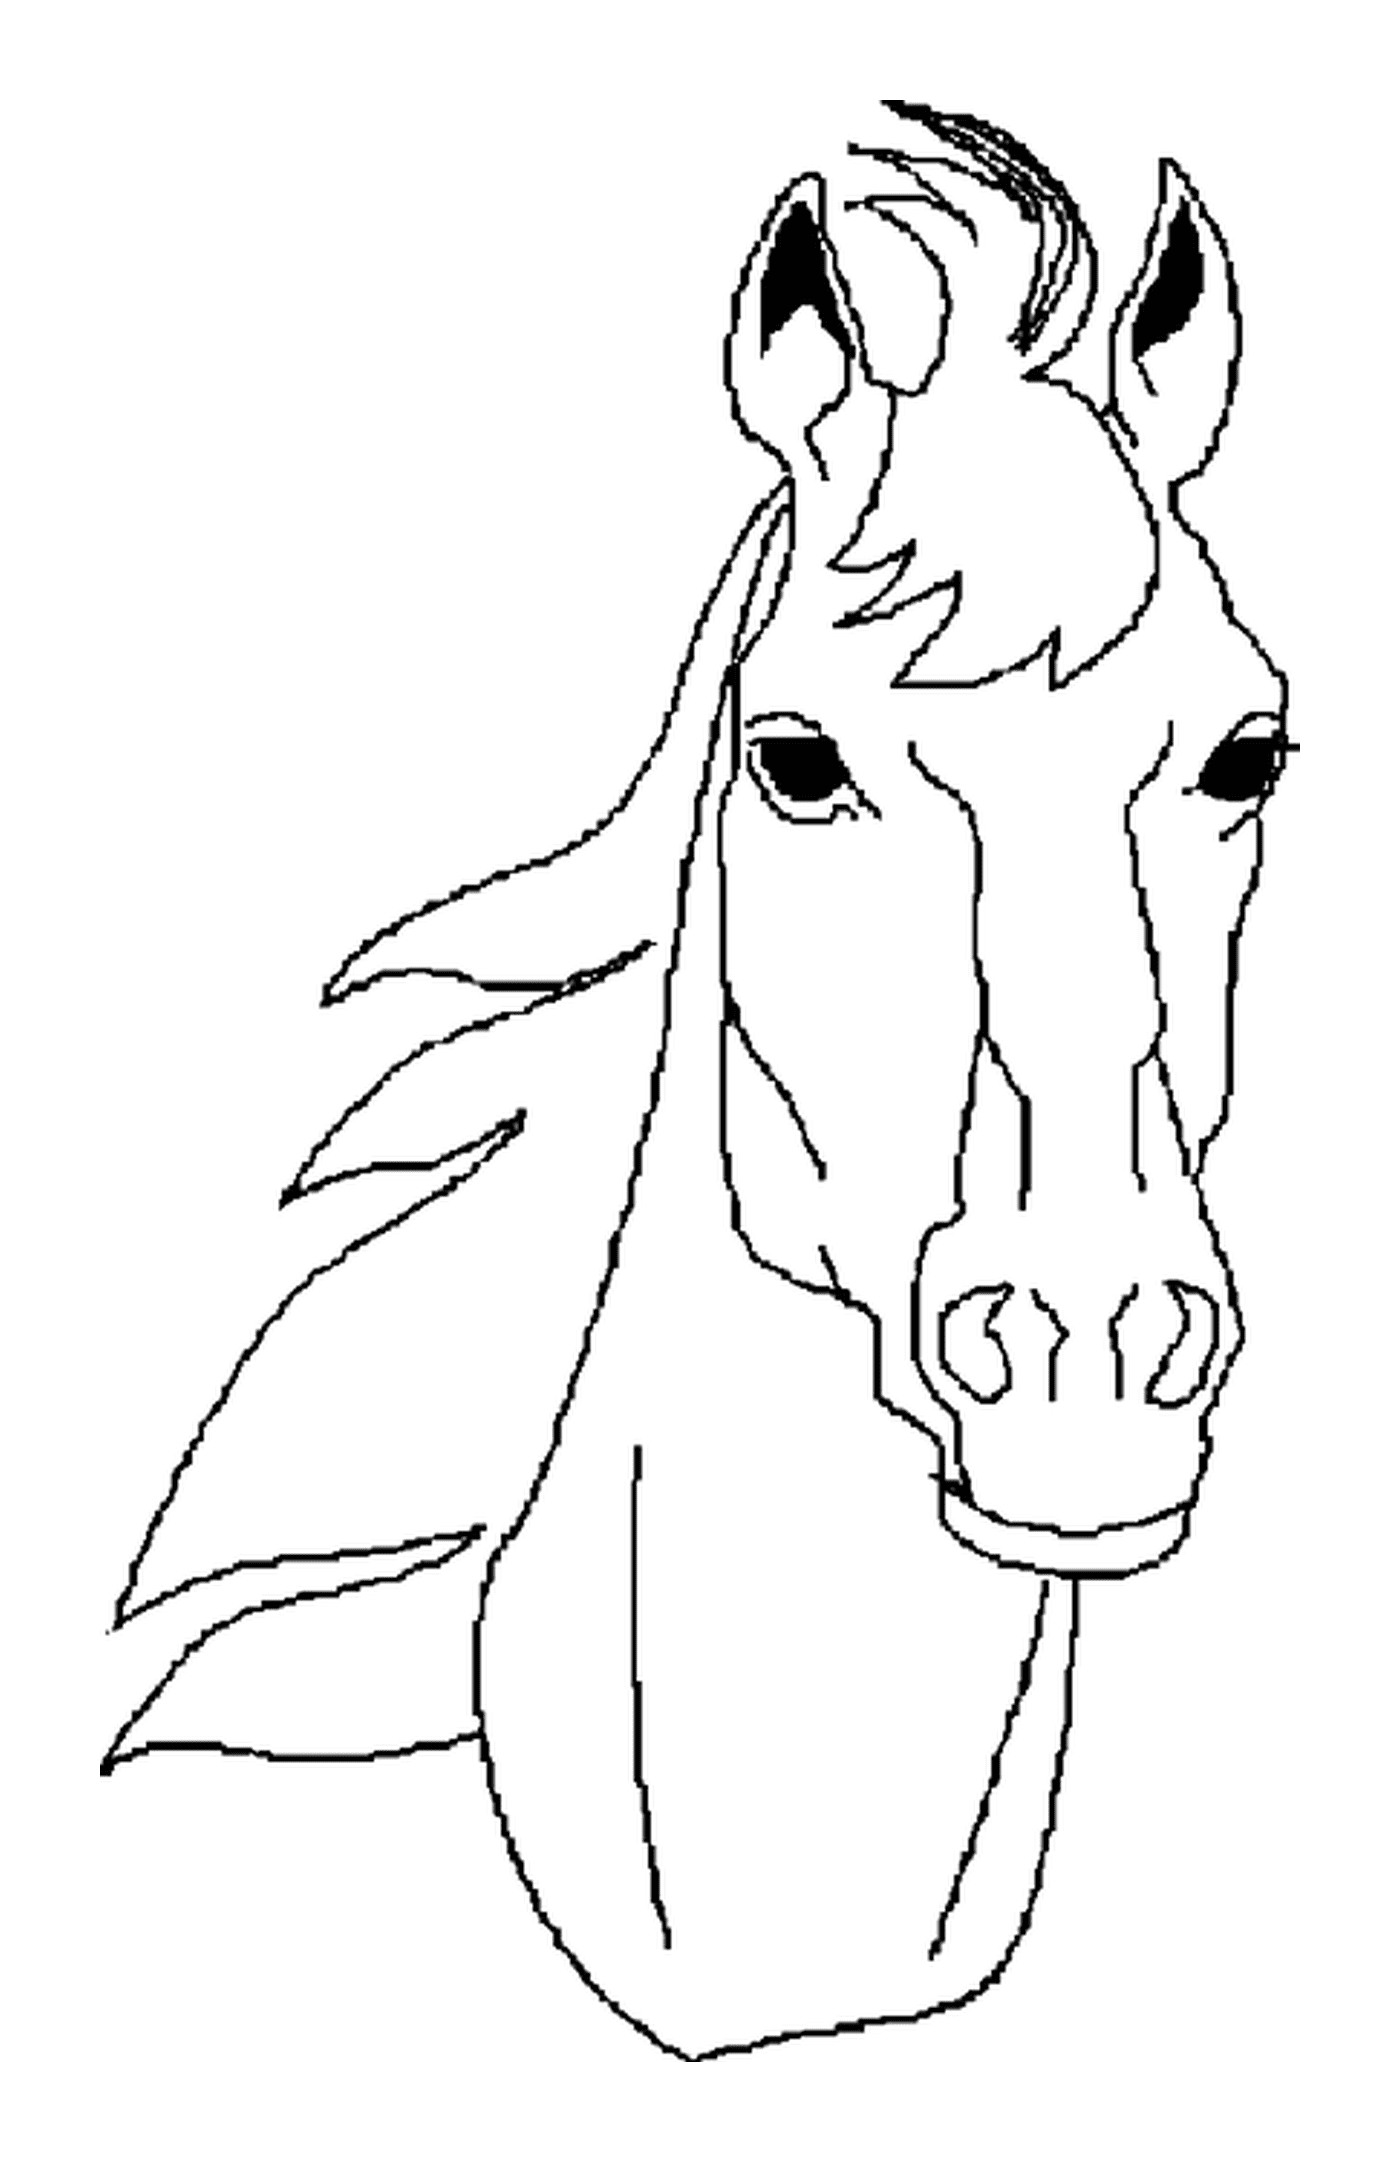  Face portrait of a horse head 